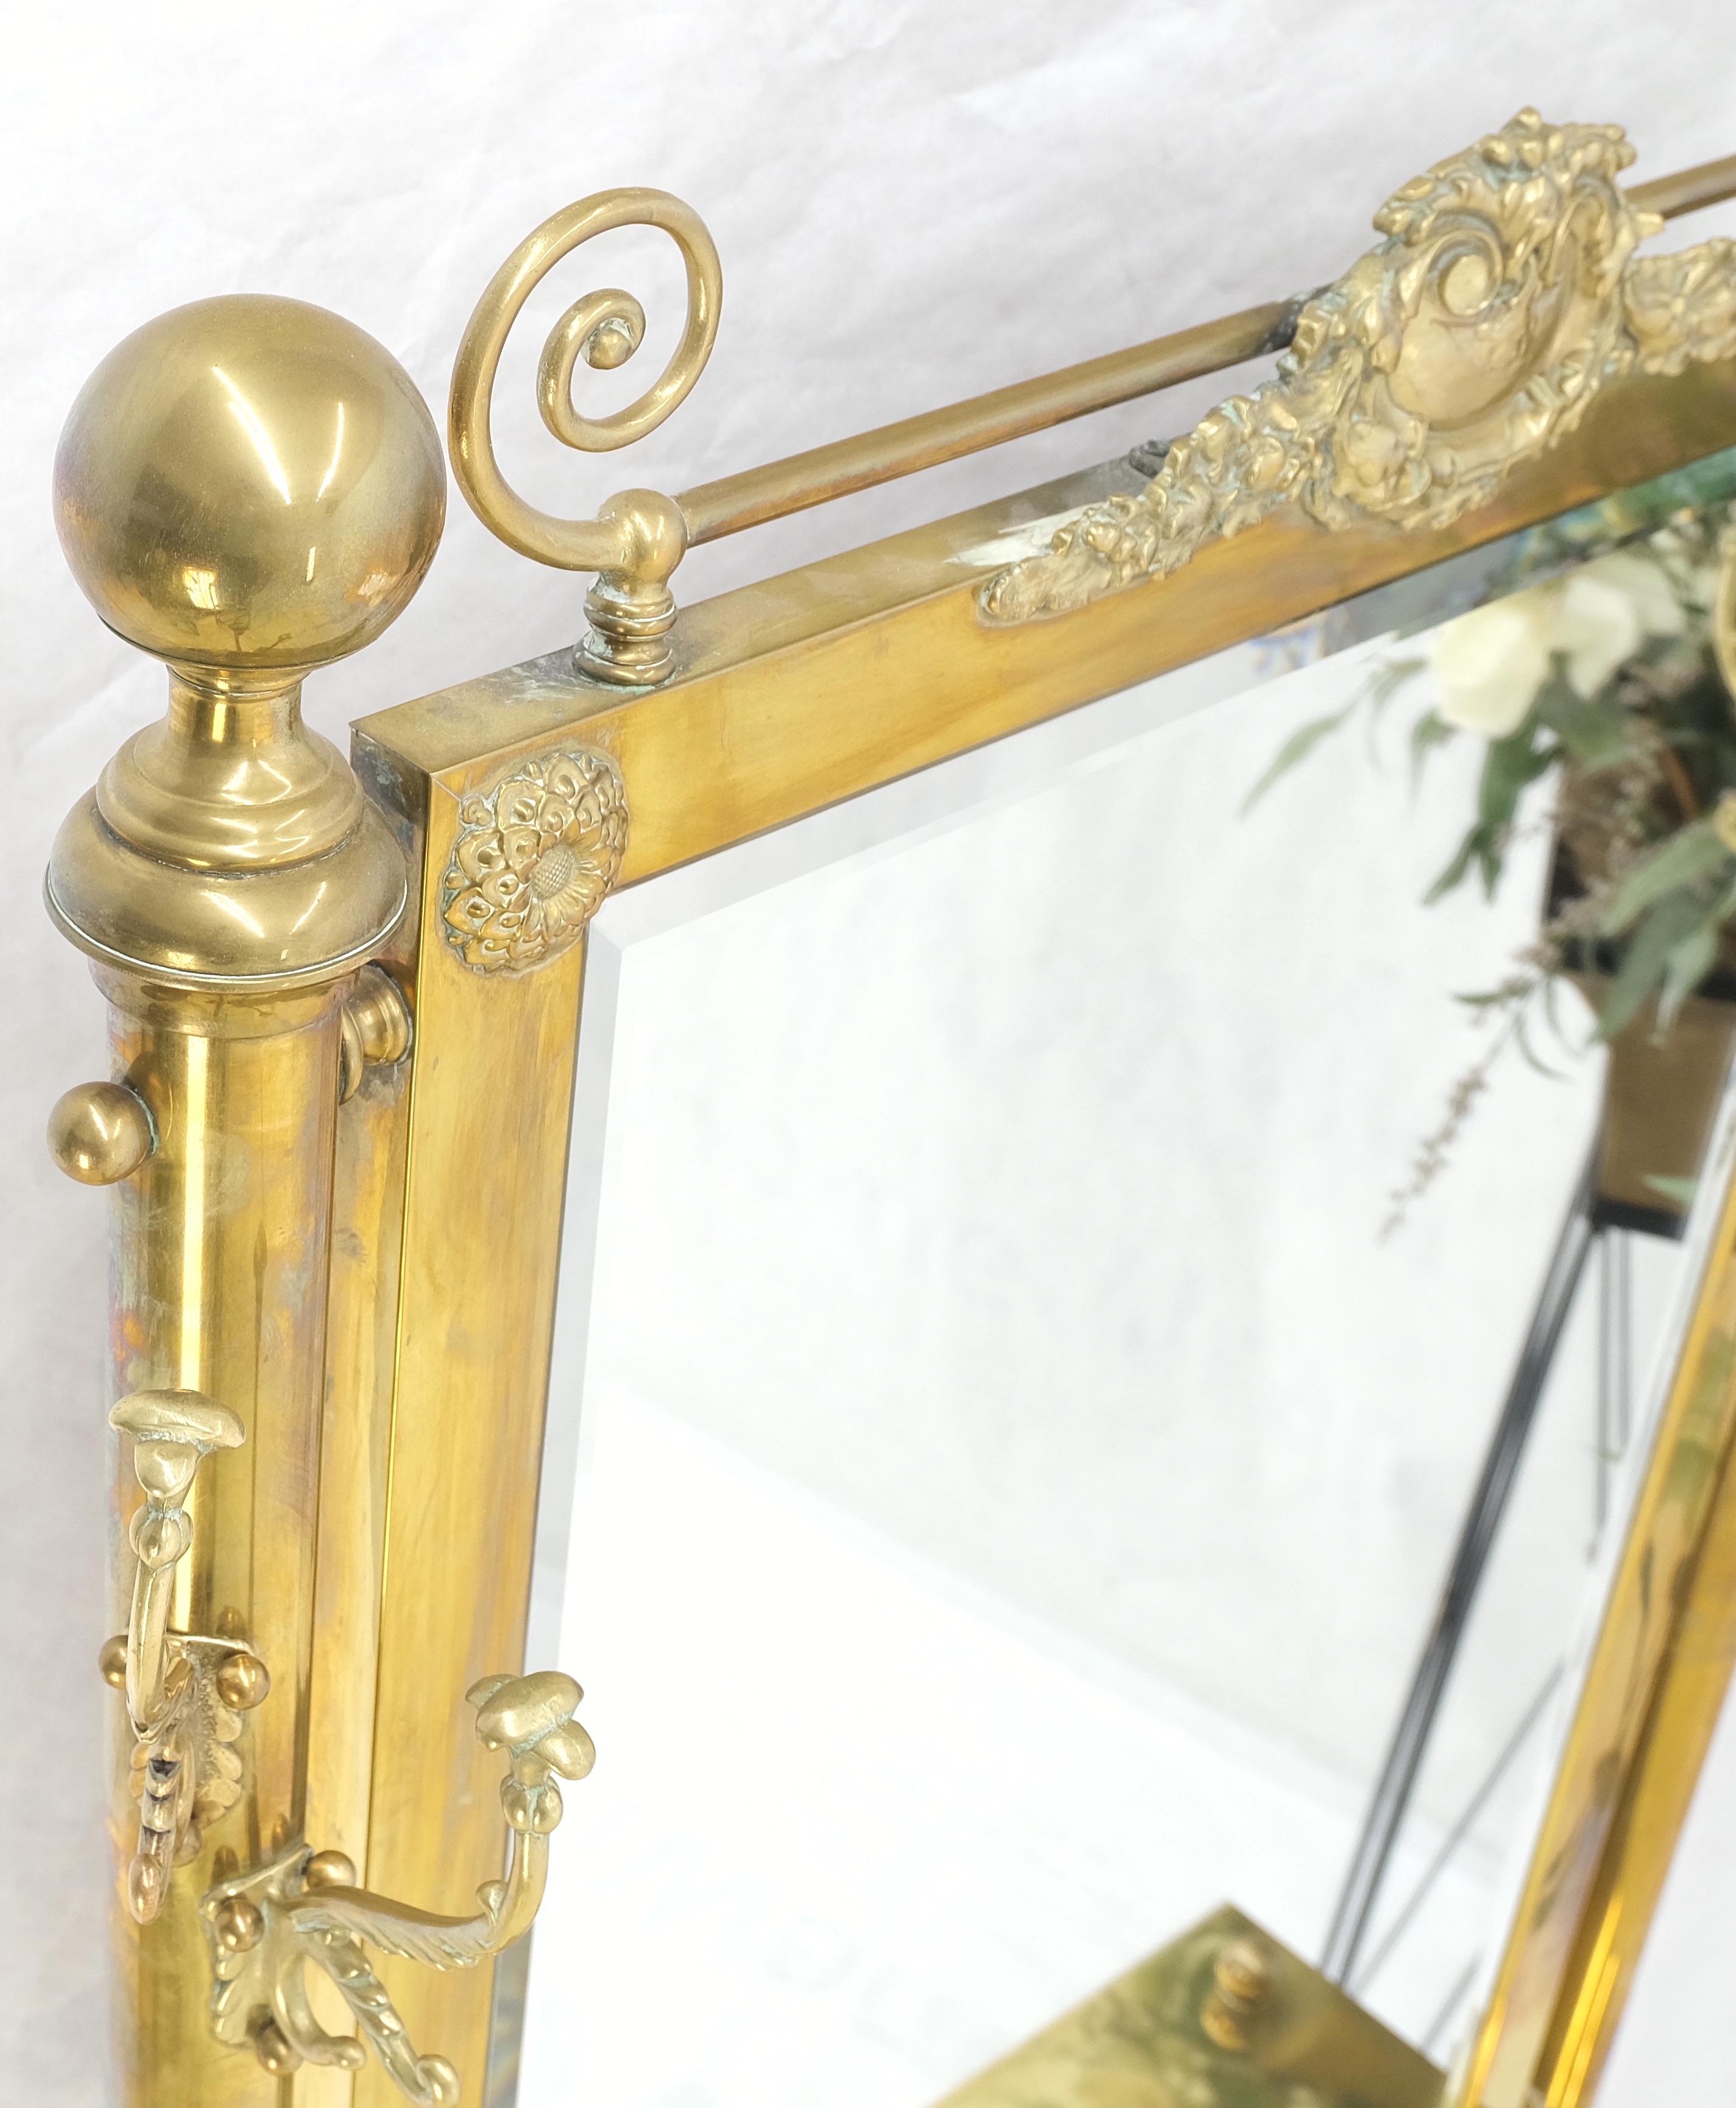 Solid Brass Entryway Hall Tree Mirror Coat Umbrella Rack Console Table Claw Feet NICE!.